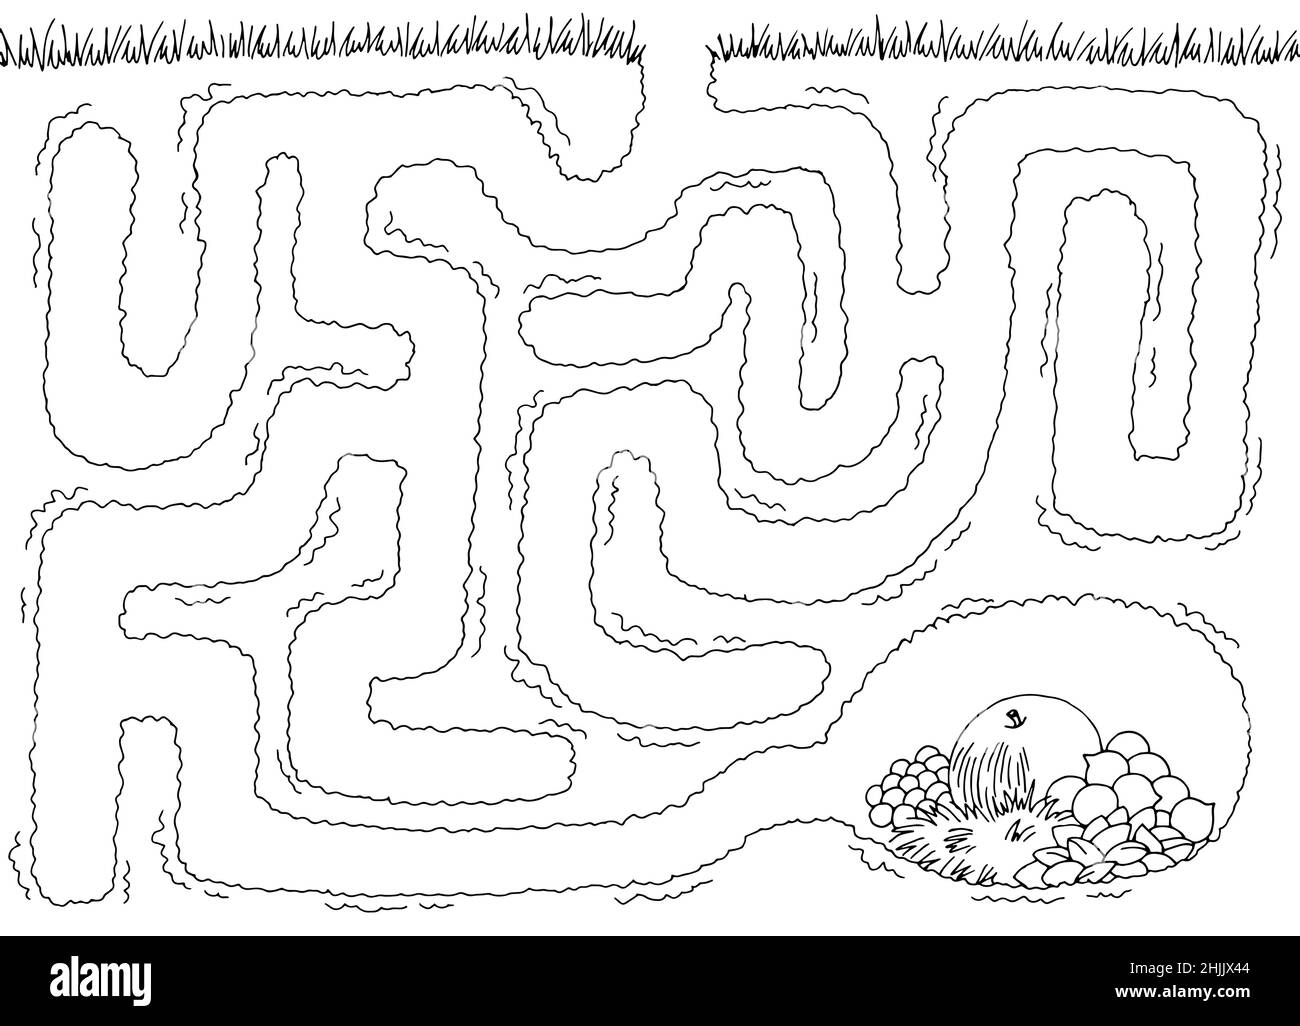 Burrow Labyrinth Grafik schwarz weiß Skizze Illustration Vektor Stock Vektor